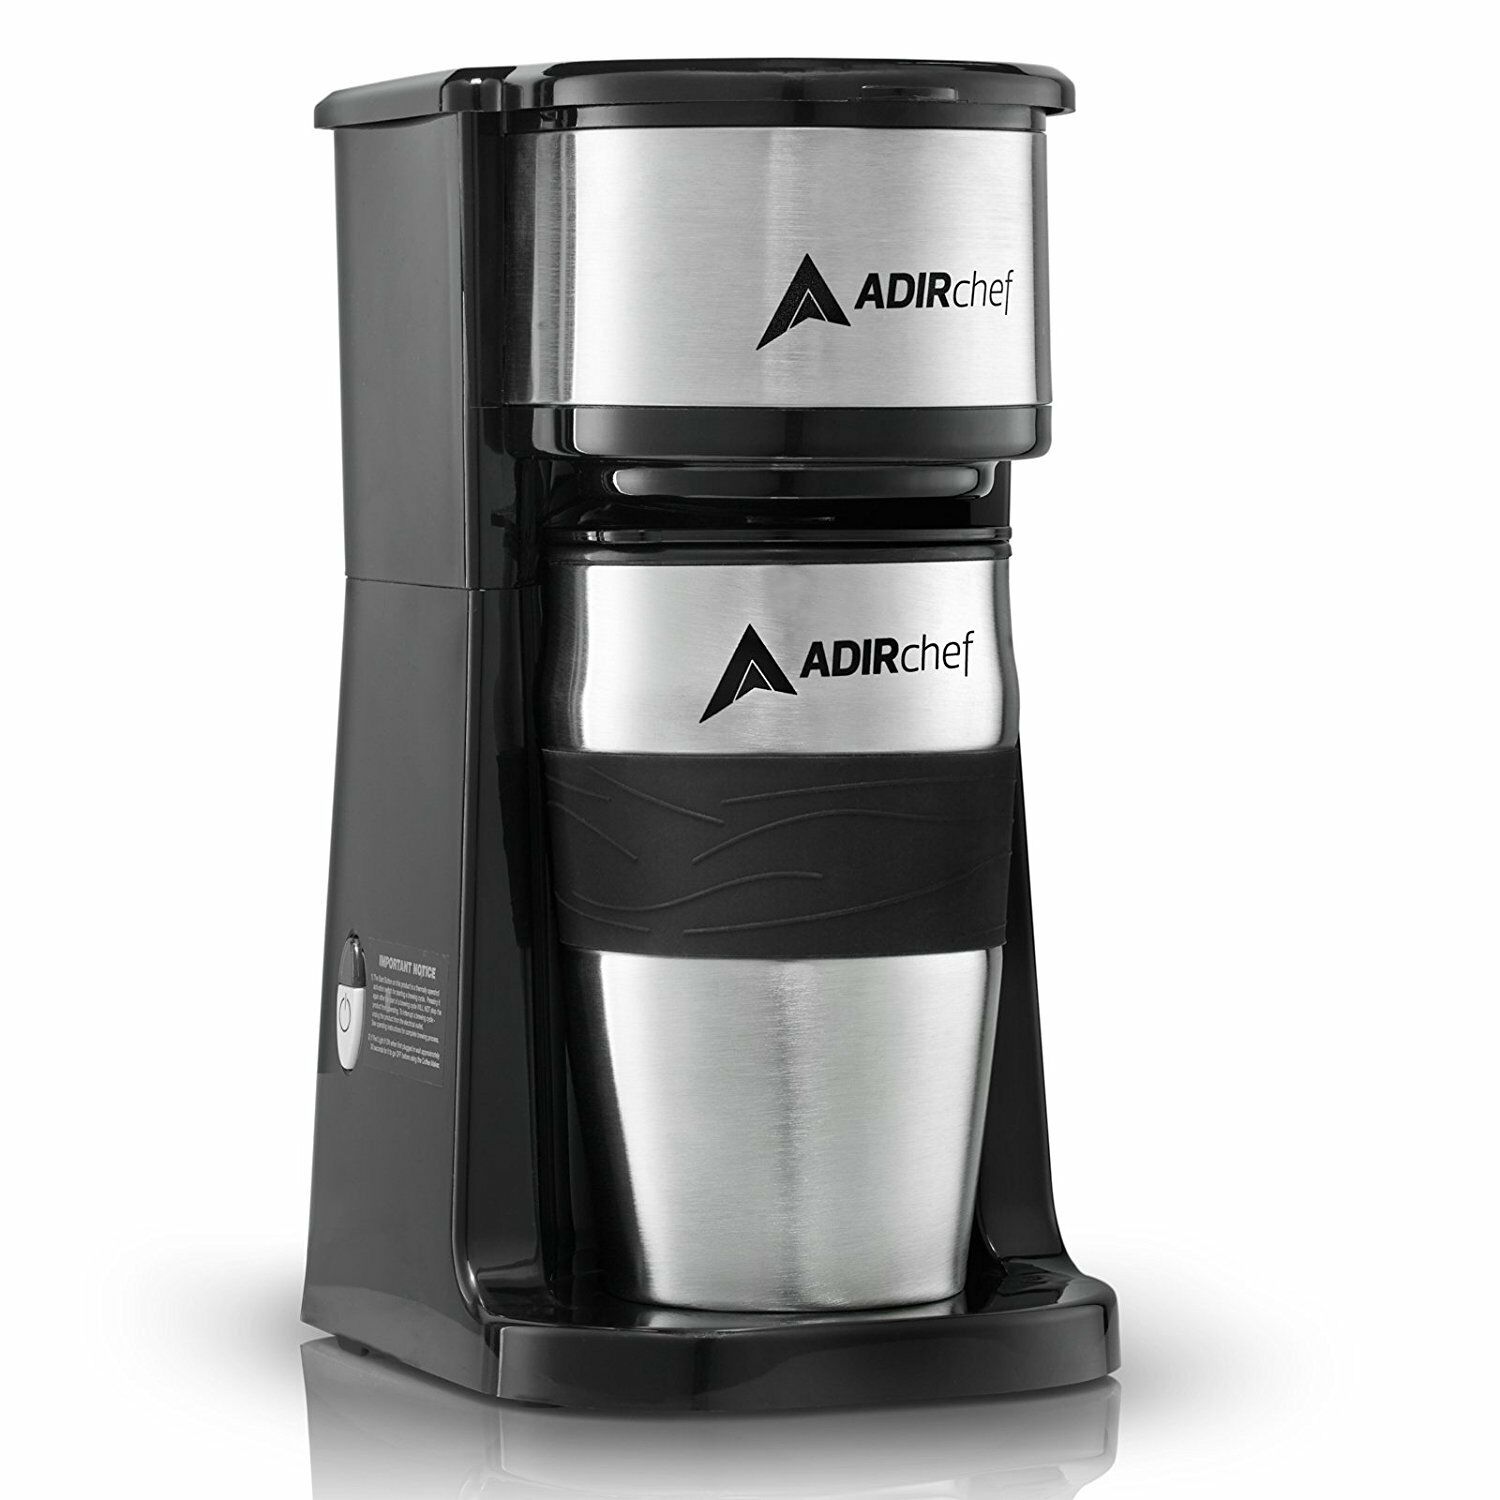 Adirchef Grab N' Go Personal Coffee Maker With 15 Oz. Travel Mug Black/stainless